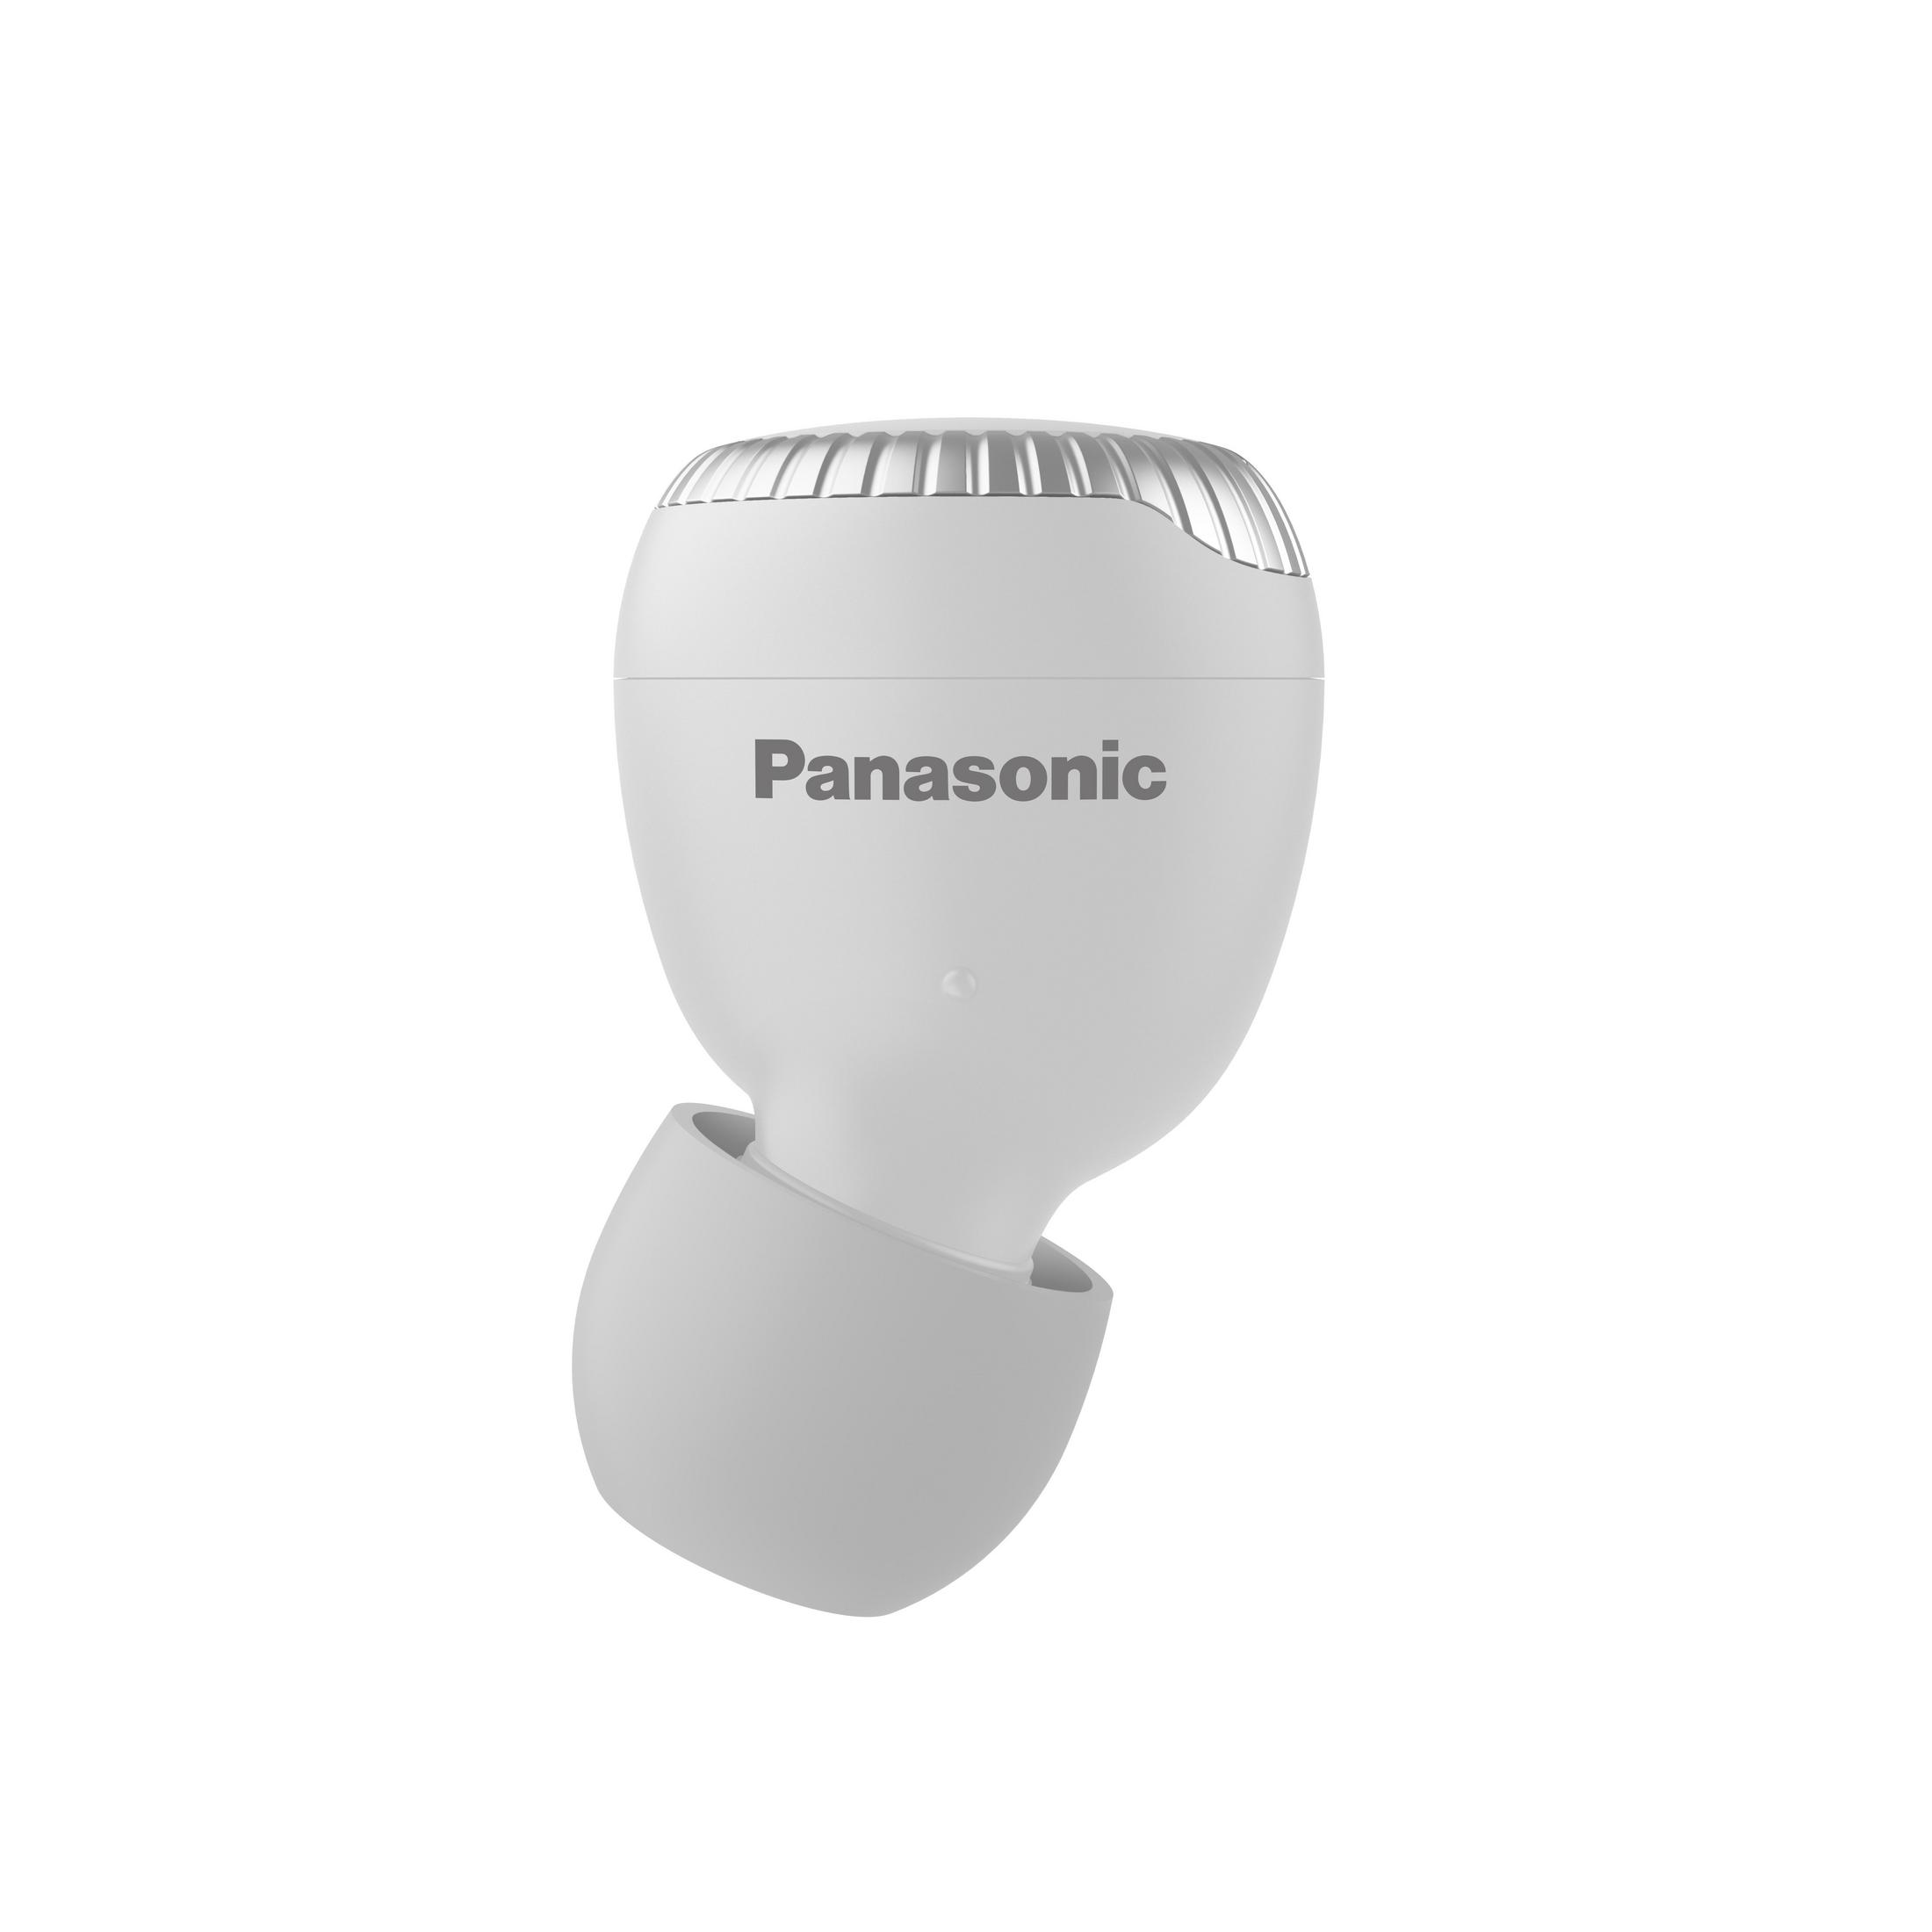 PANASONIC RZ-S 300 WE-W WEISS, In-ear Weiß Bluetooth Kopfhörer